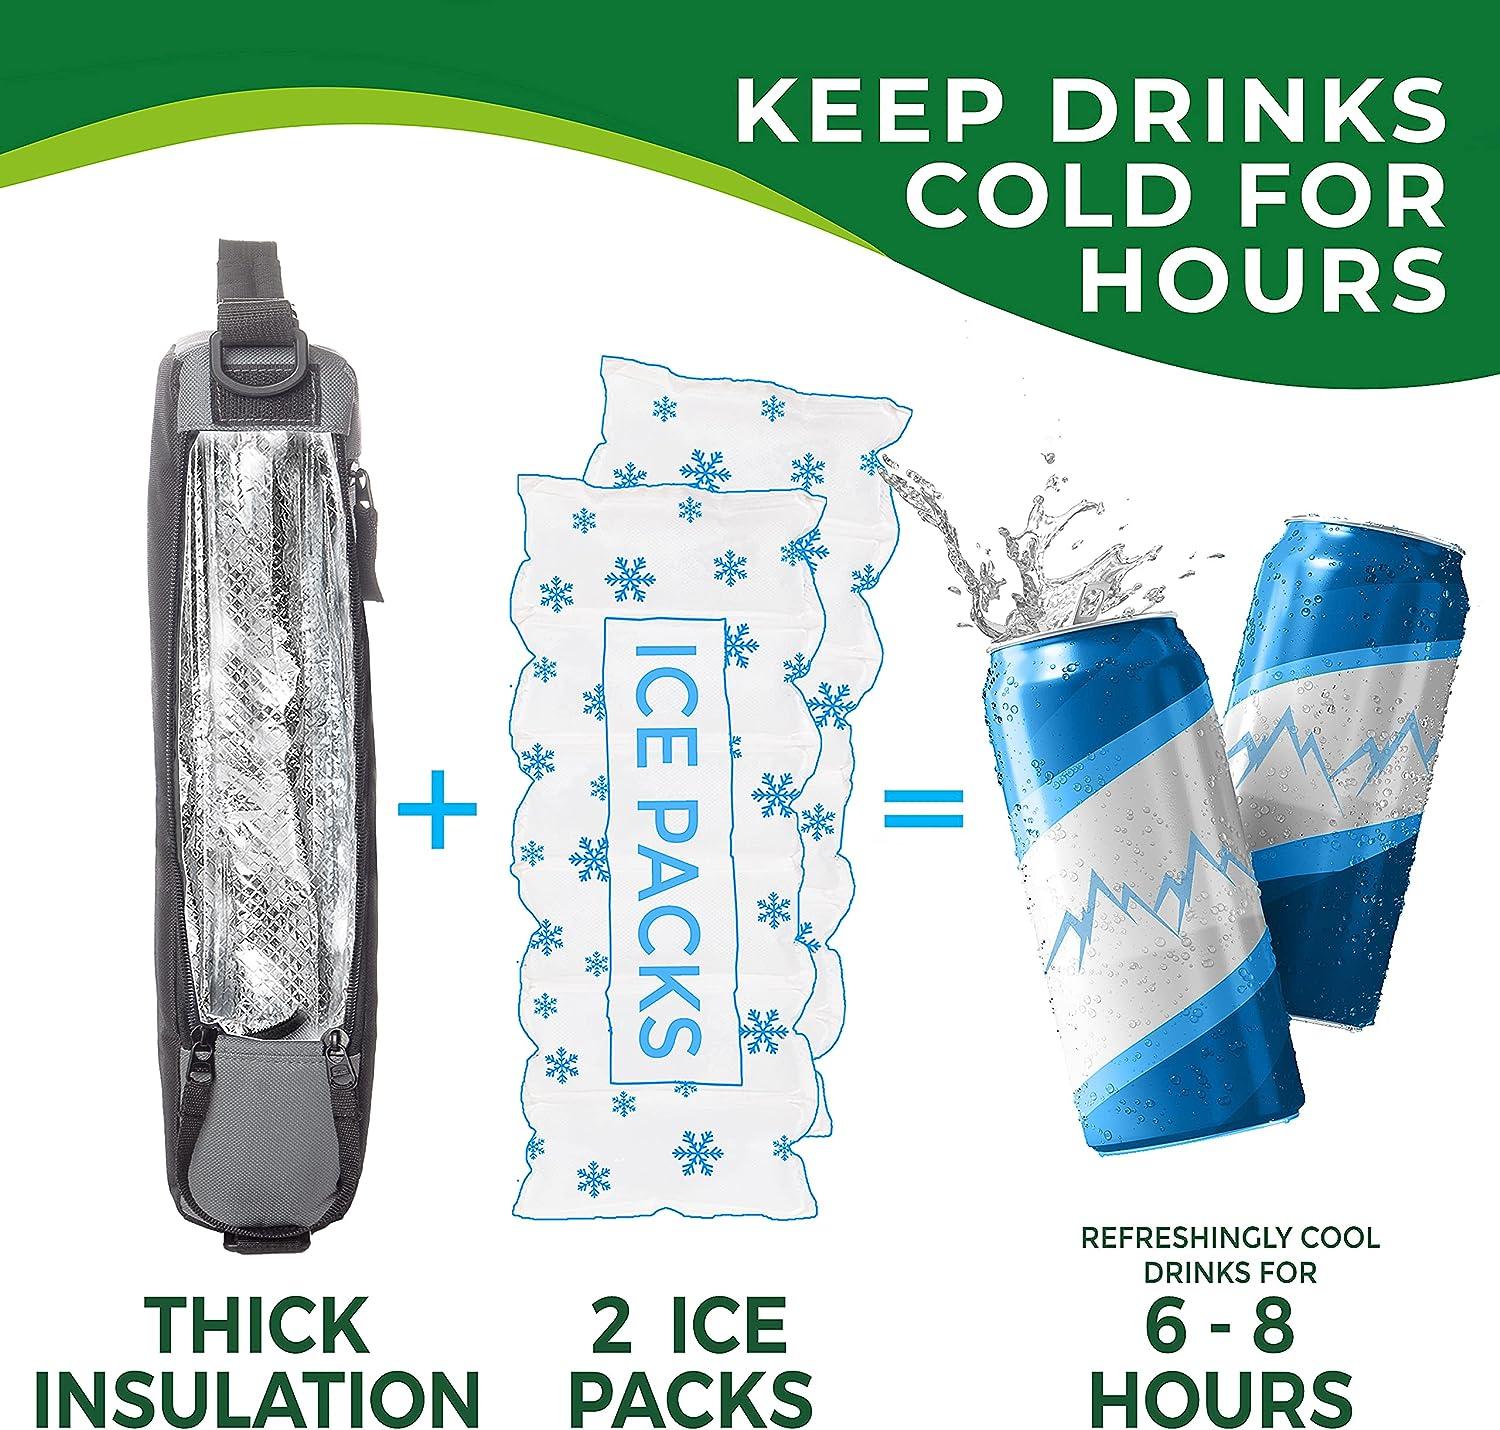 NEW ! ICECO Soft Cooler Bag，Portable Golf Cooler Bag